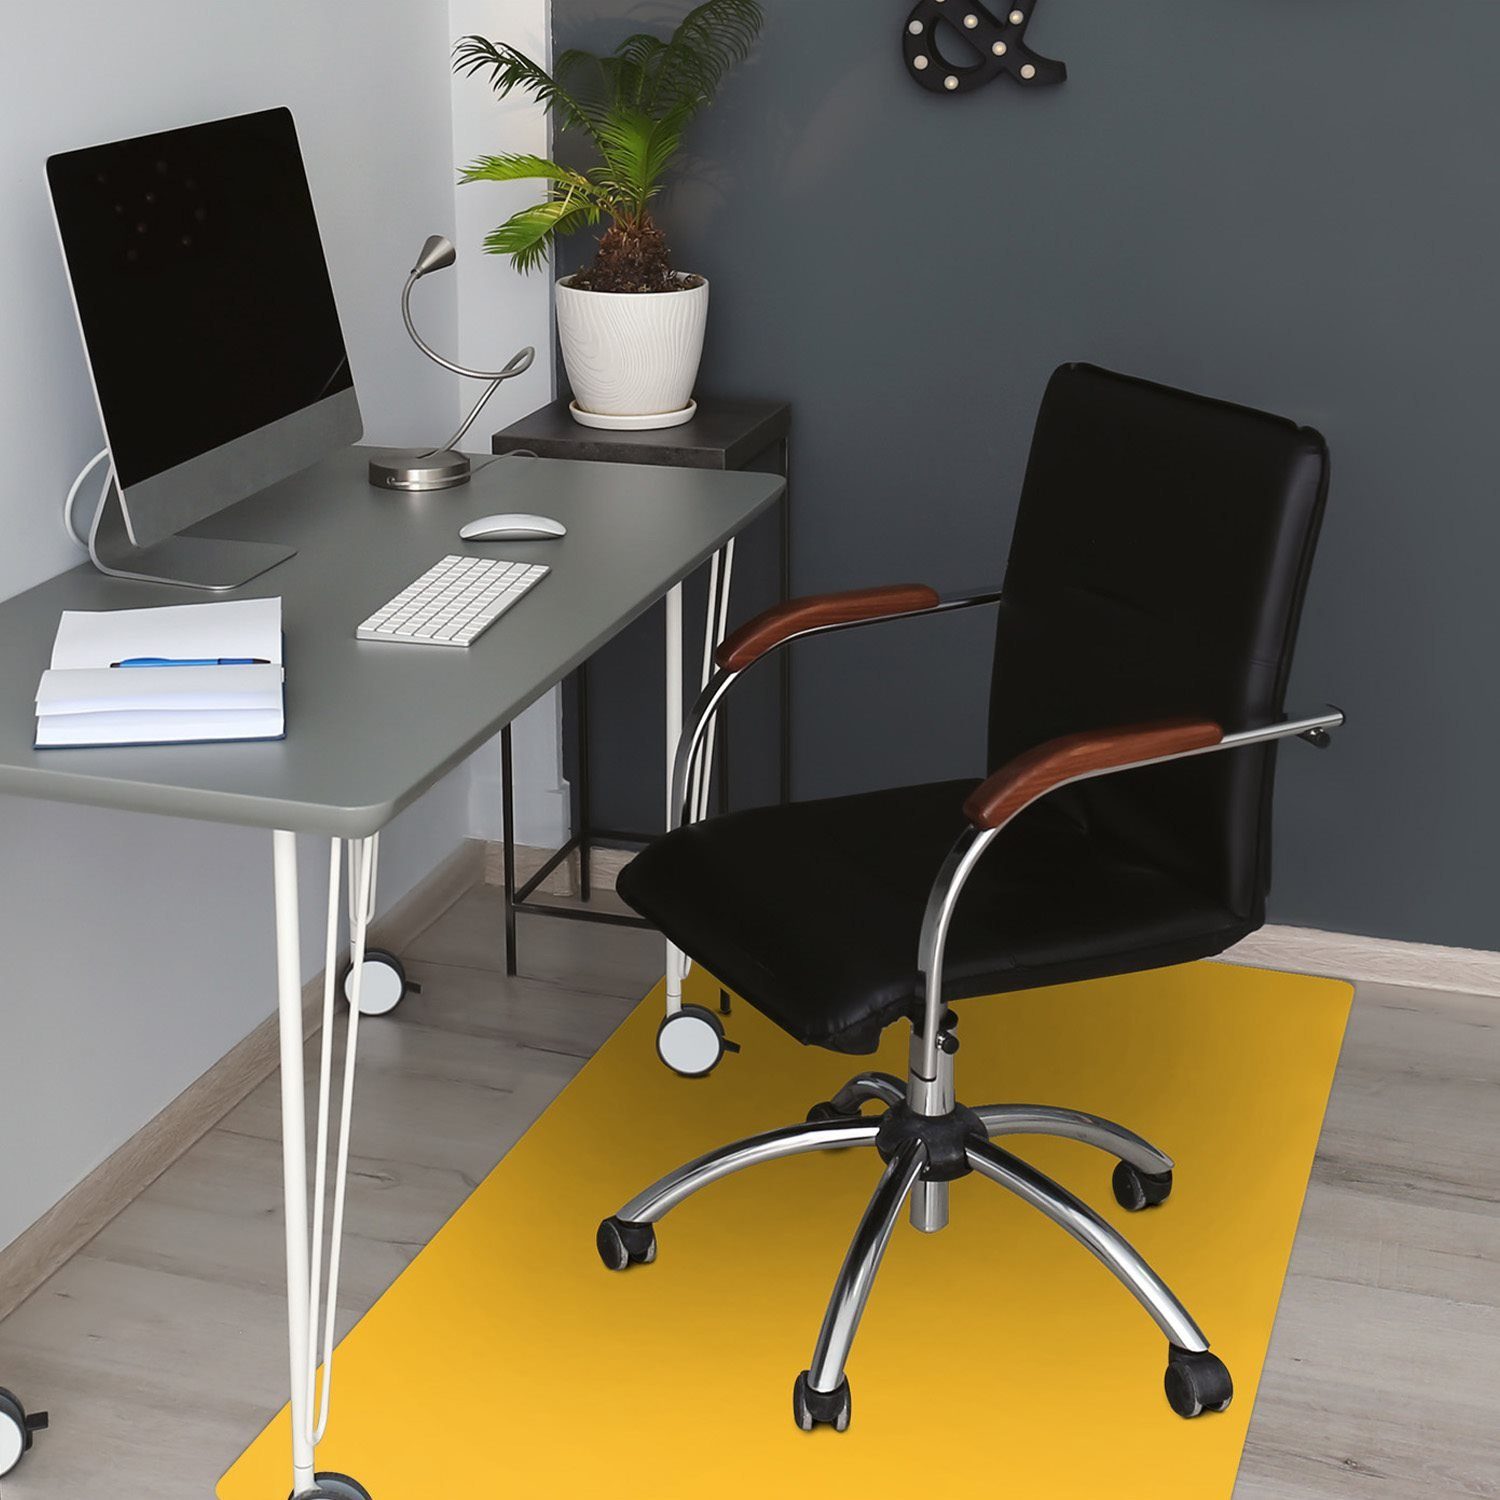 100 Gelben Stuhlunterlage 70 Stuhlunterlage, x cm, cm Bürostuhlunterlage Bodenmatte Bodenschutzmatte Bürostuhlunterlage Tulup Bürostühle